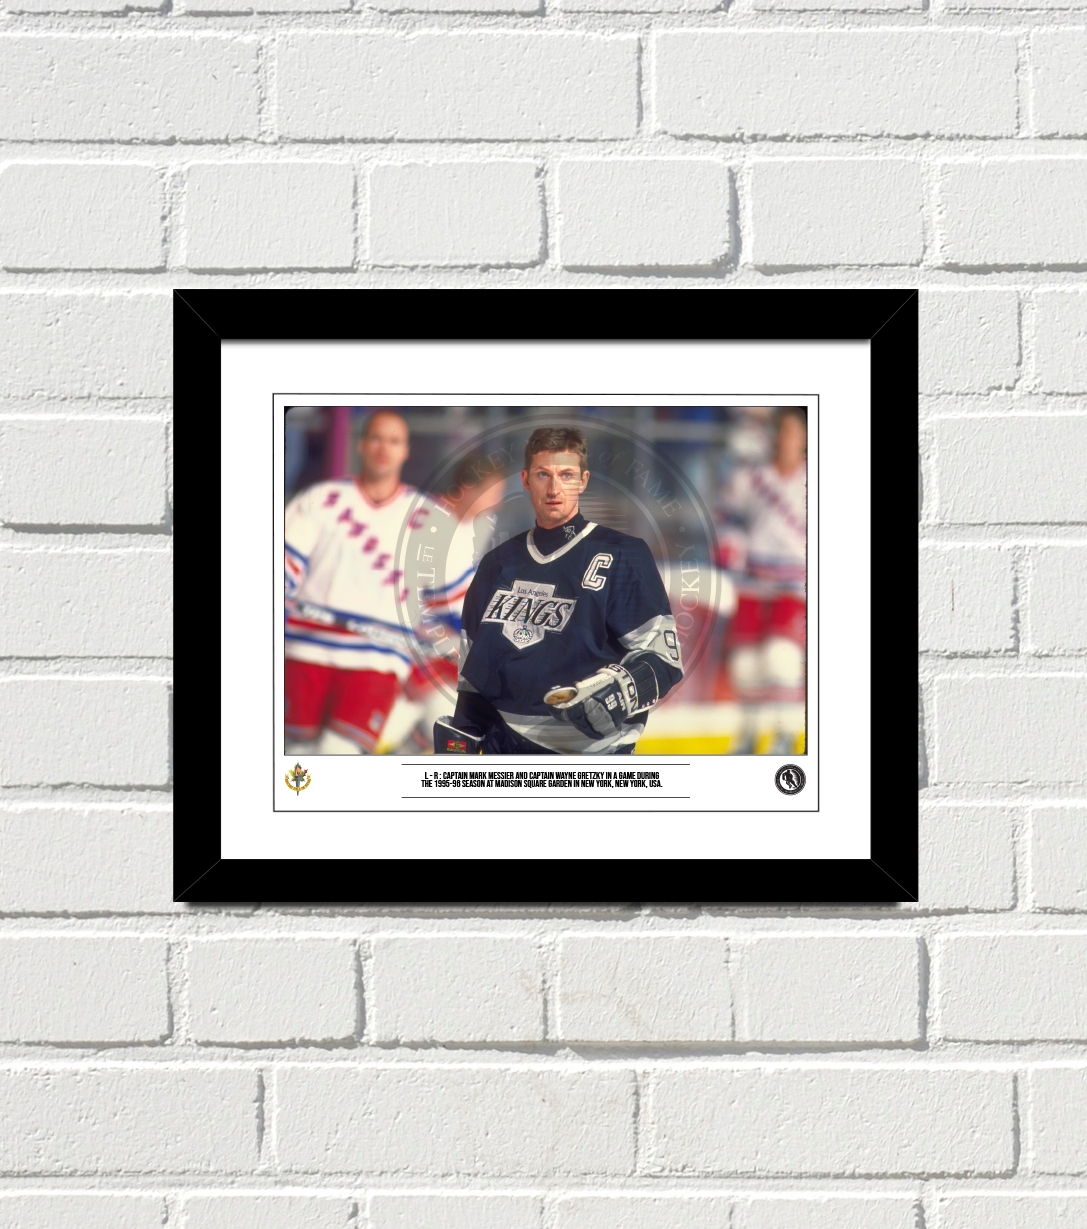 Vintage Hockey framed photo of Wayne Gretzky - Los Angeles(LA) Kings